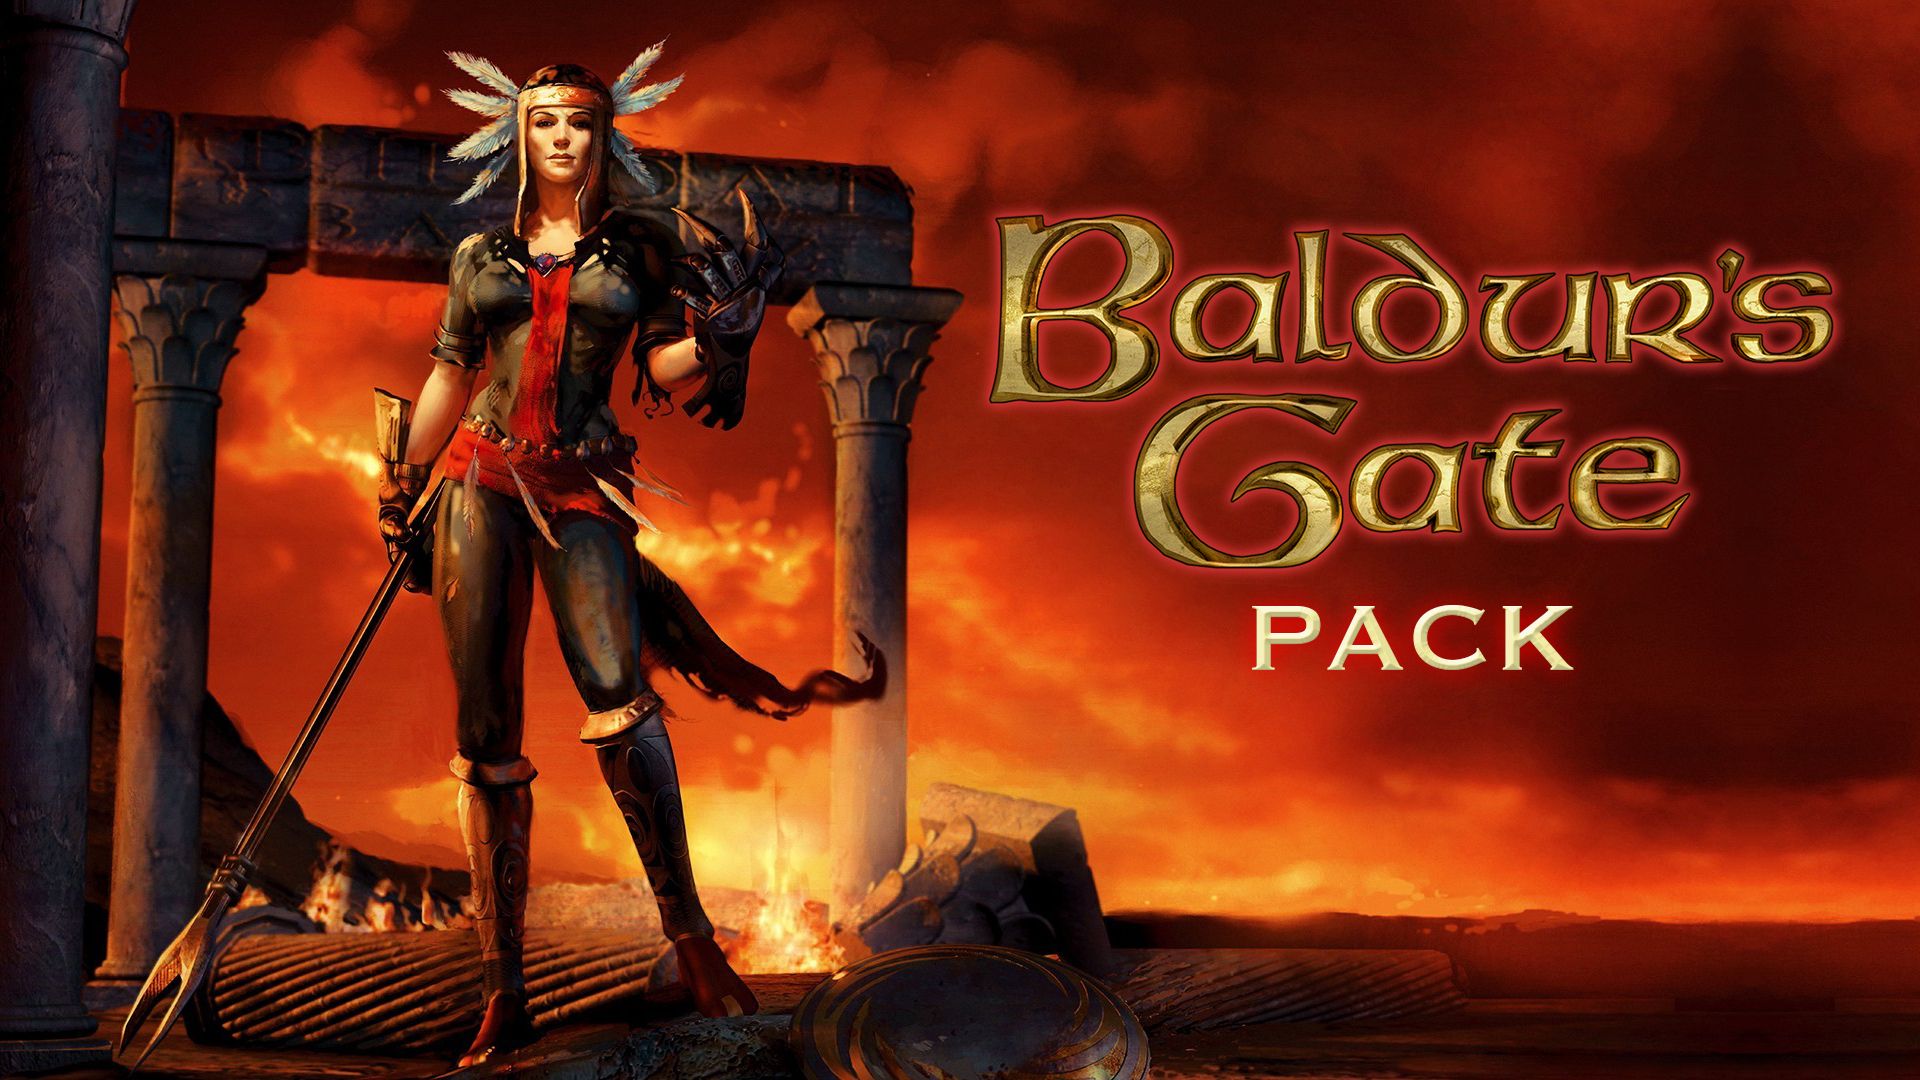 Baldur's Gate Pack. Steam Game Bundle